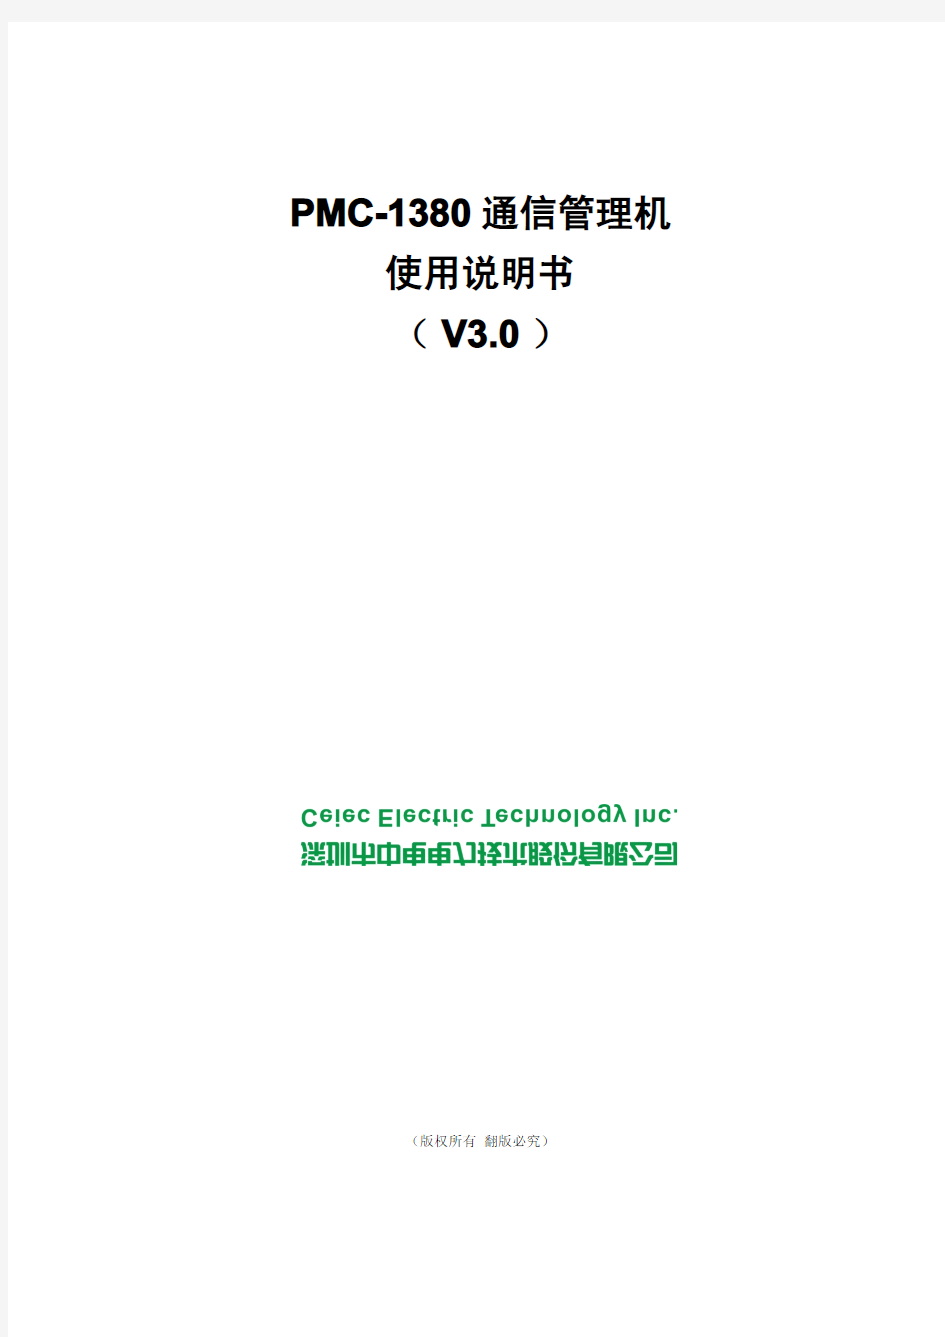 PMC-1380-3 通信管理机使用说明书_V3.0_20110907